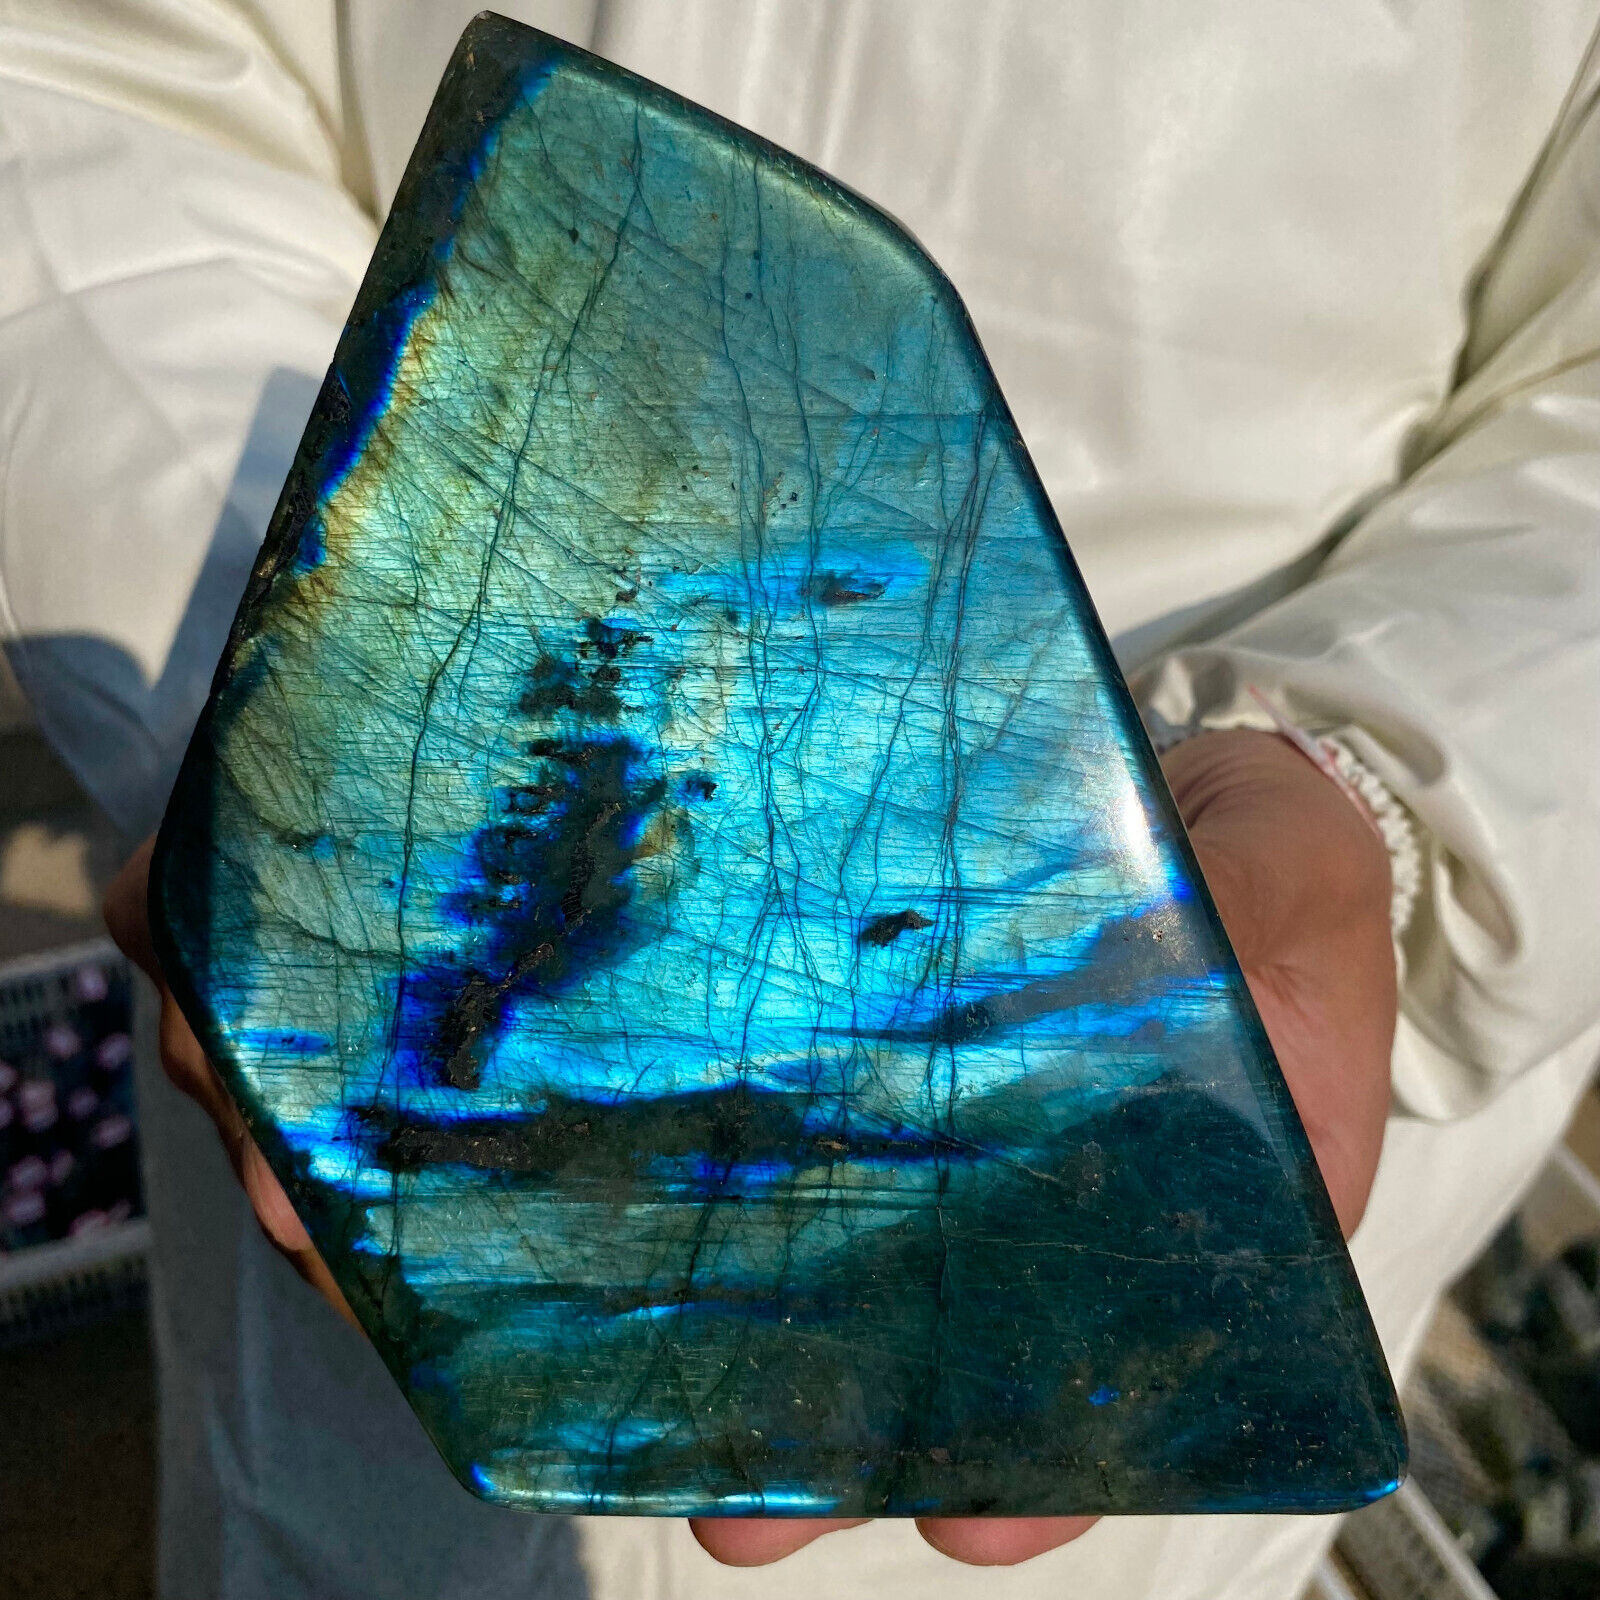 3.3lb Large Natural Labradorite Quartz Crystal Display Mineral Specimen Healing